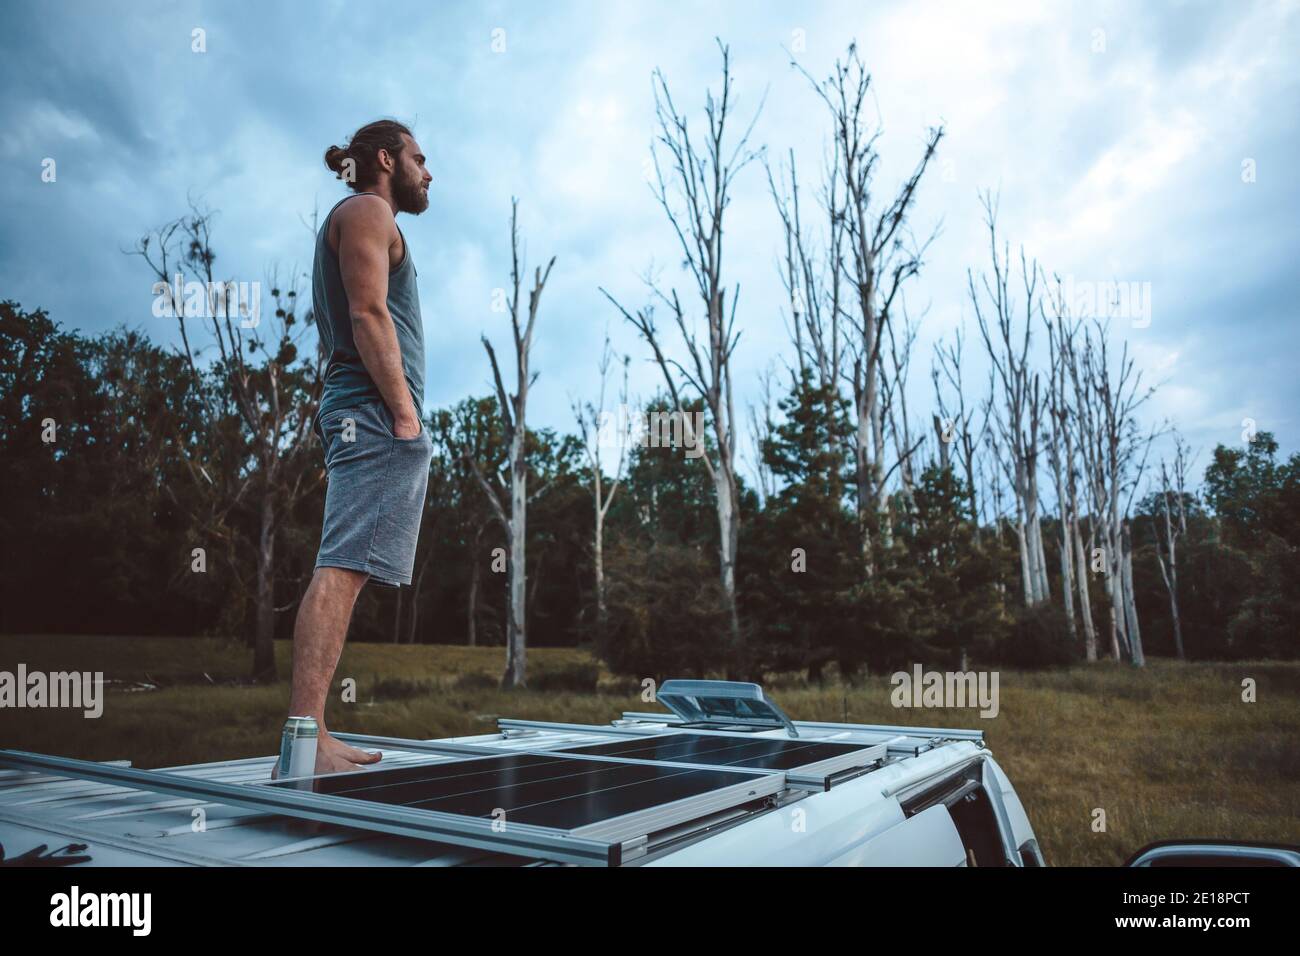 Man on top of his camper van in a moody scenery Stock Photo